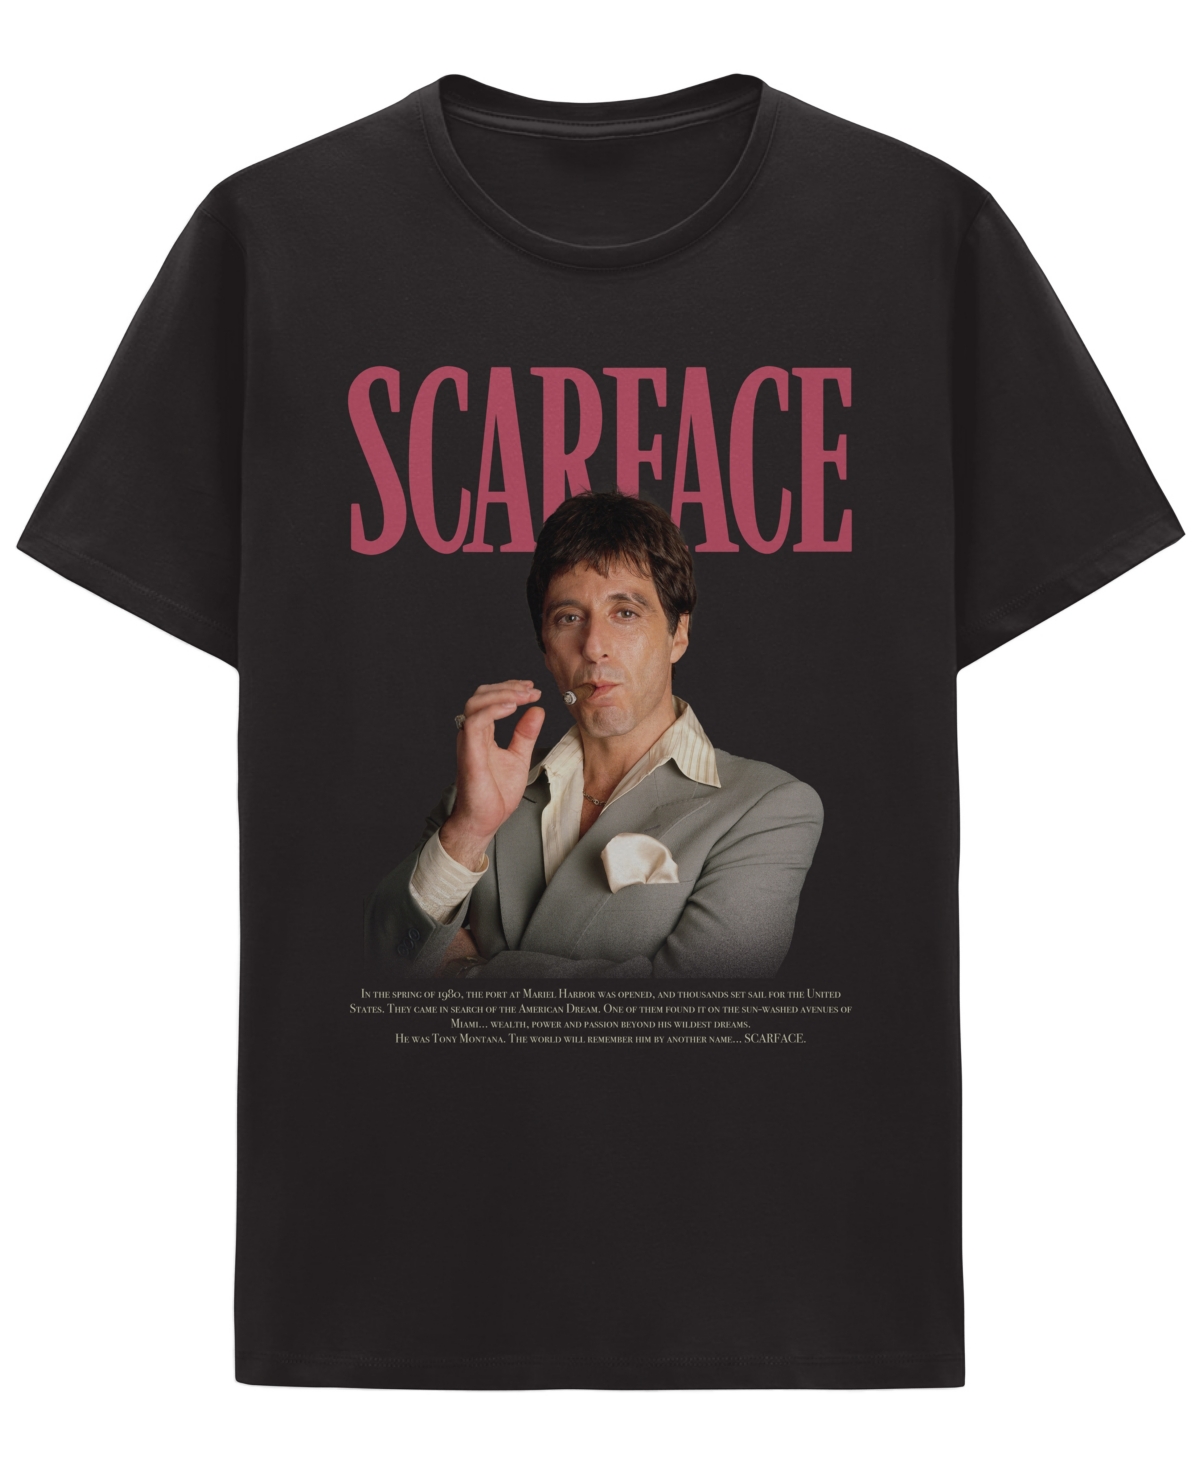 Scarface Men's Short Sleeve T-shirt - Black